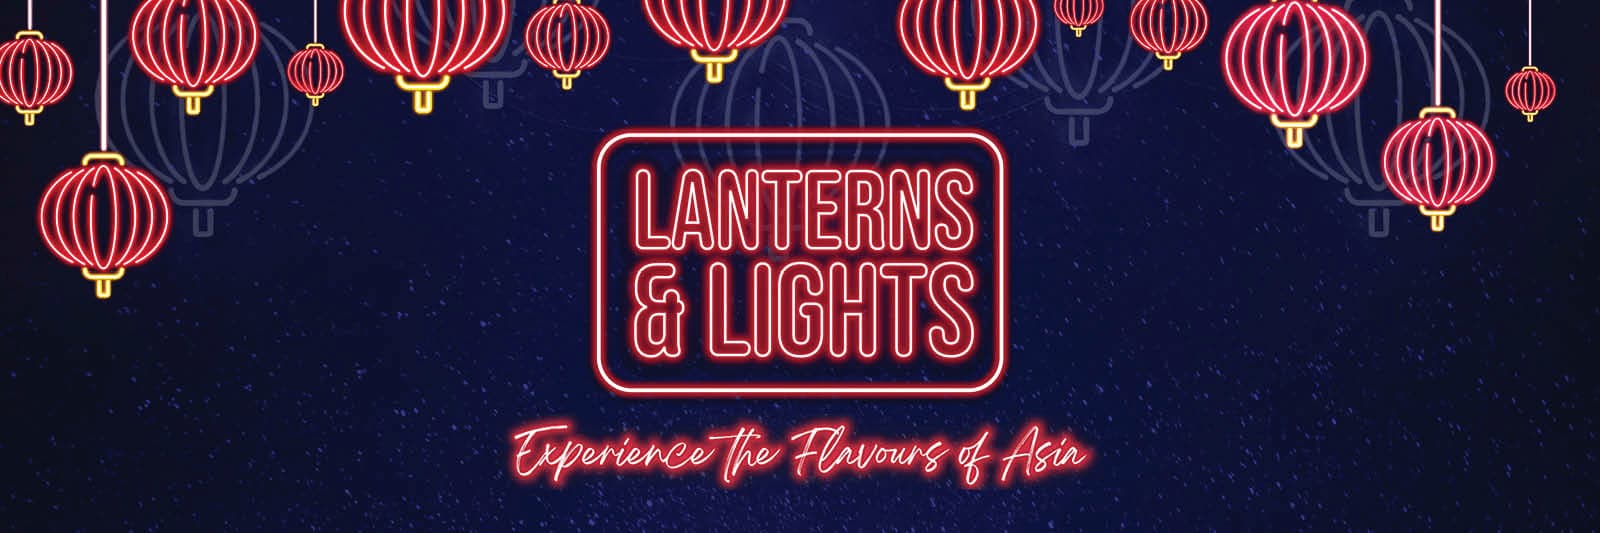 Liverpool Lanterns and Lights